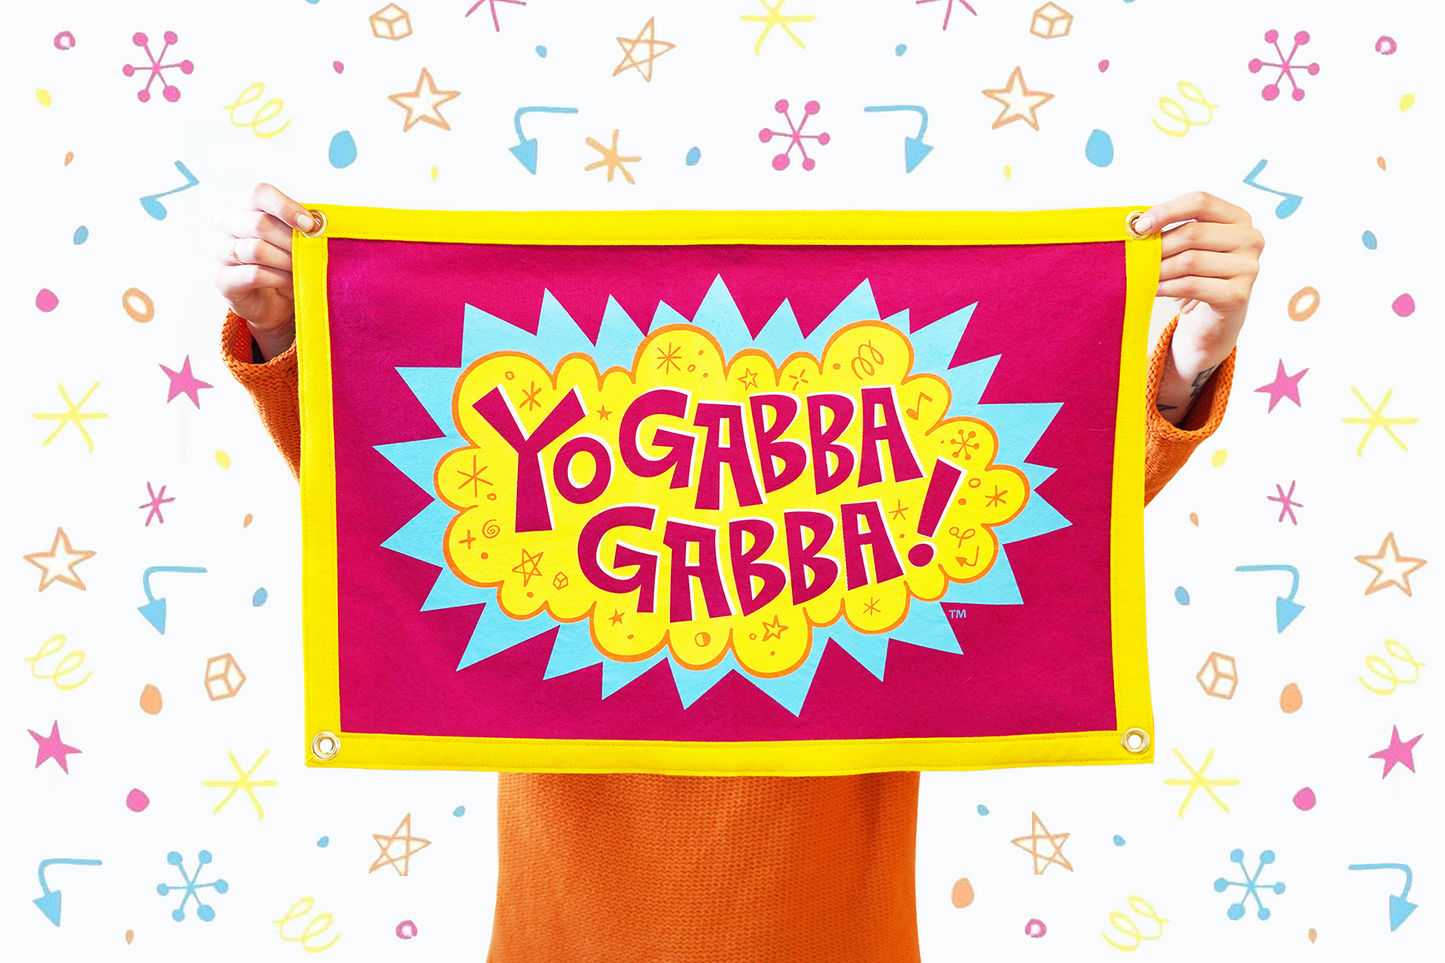 Yo Gabba Gabba! Camp Flag • Yo Gabba Gabba! x Oxford Pennant